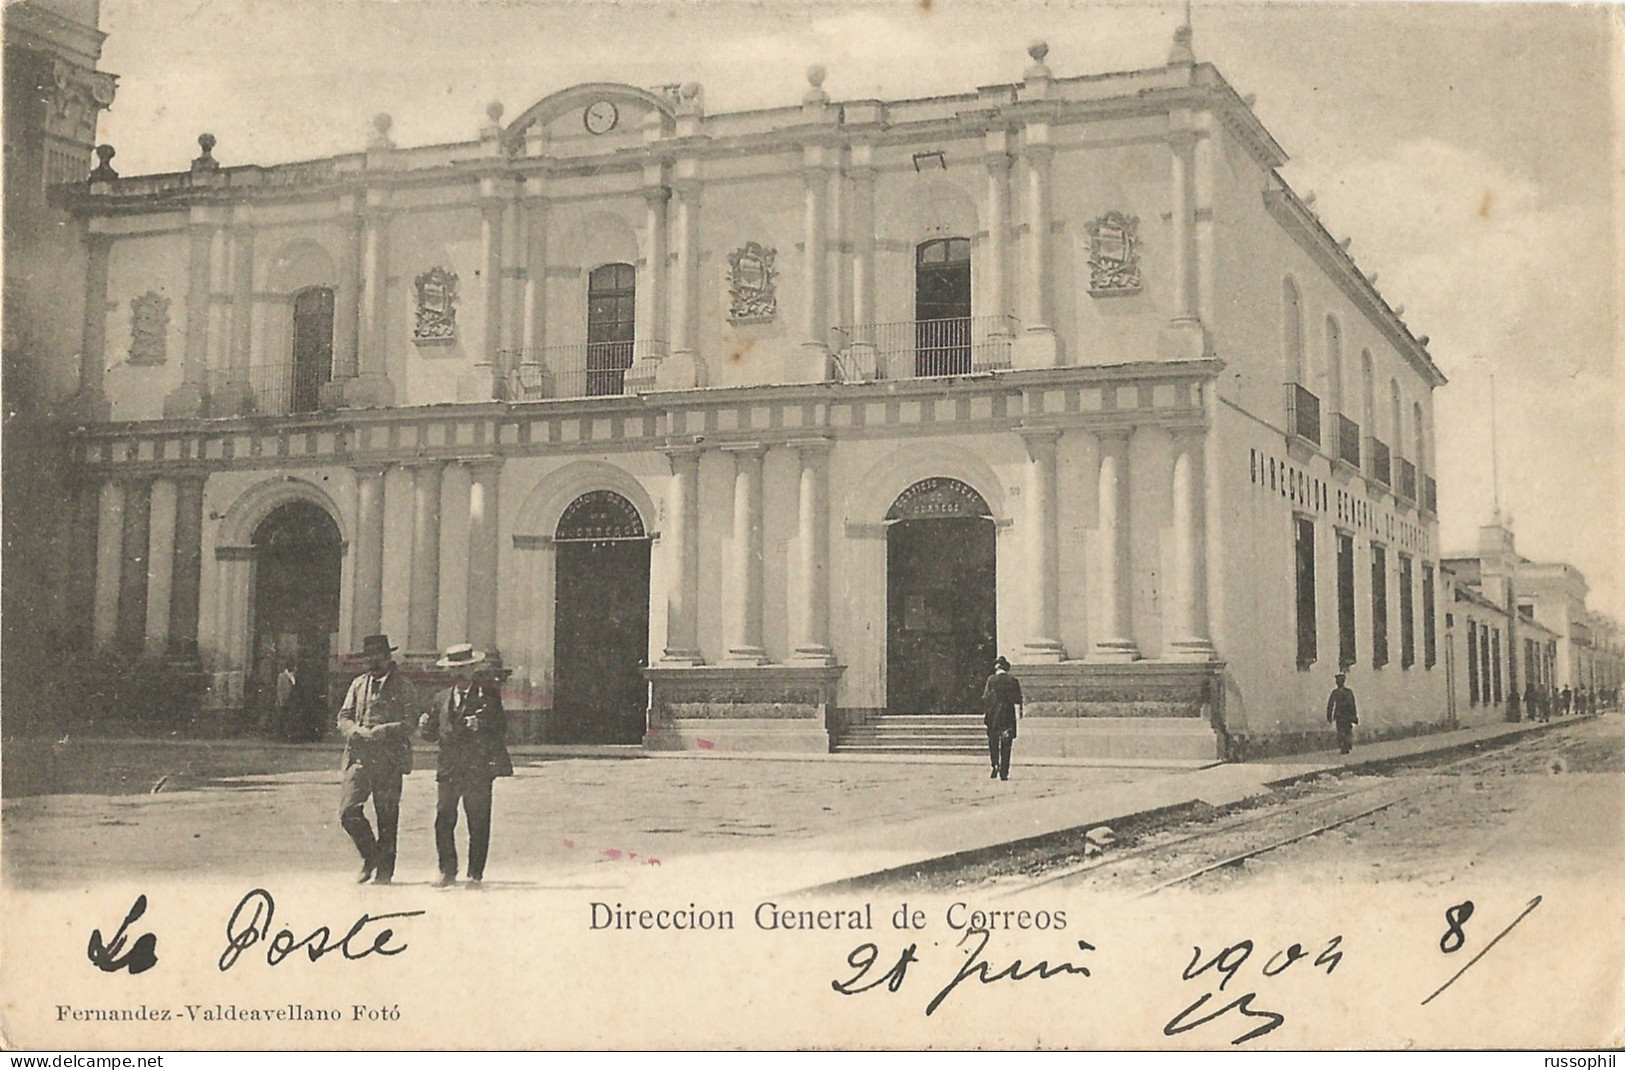 GUATEMALA - DIRECCION GENERAL DE CORREOS - FERNANDEZ VALDEAVELLANO FOTO - GOOD FRANKING -1904 - Guatemala